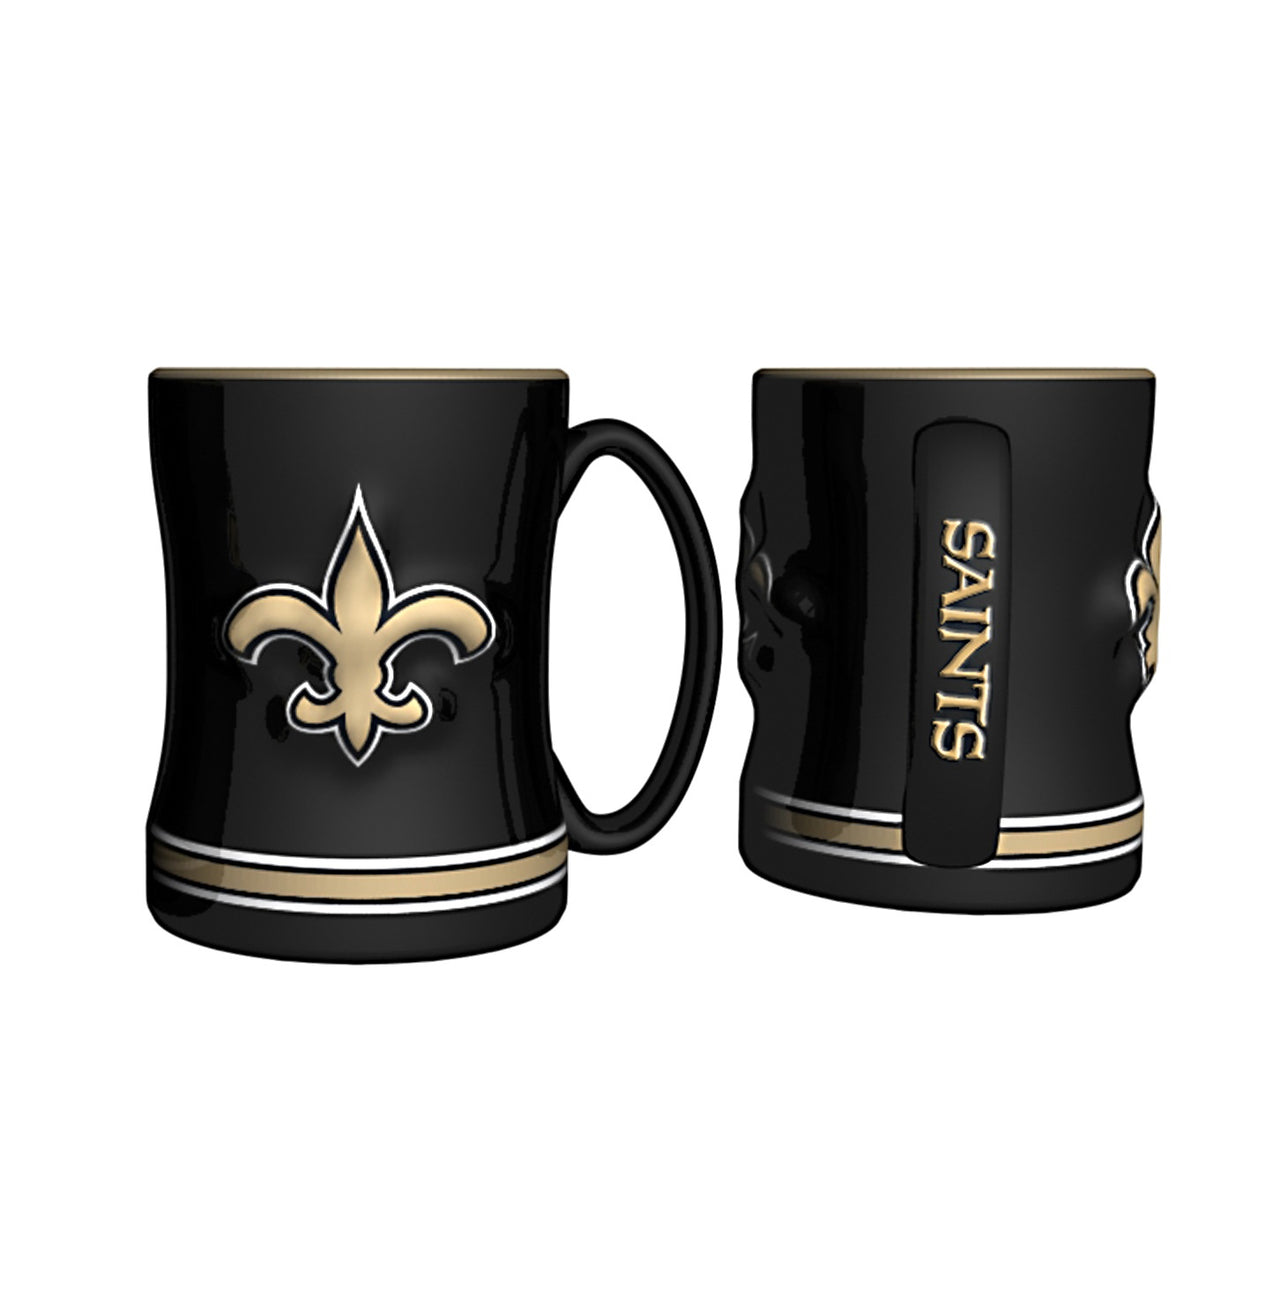 New Orleans Saints NFL Football Logo Relief 14 oz. Mug - Dynasty Sports & Framing 